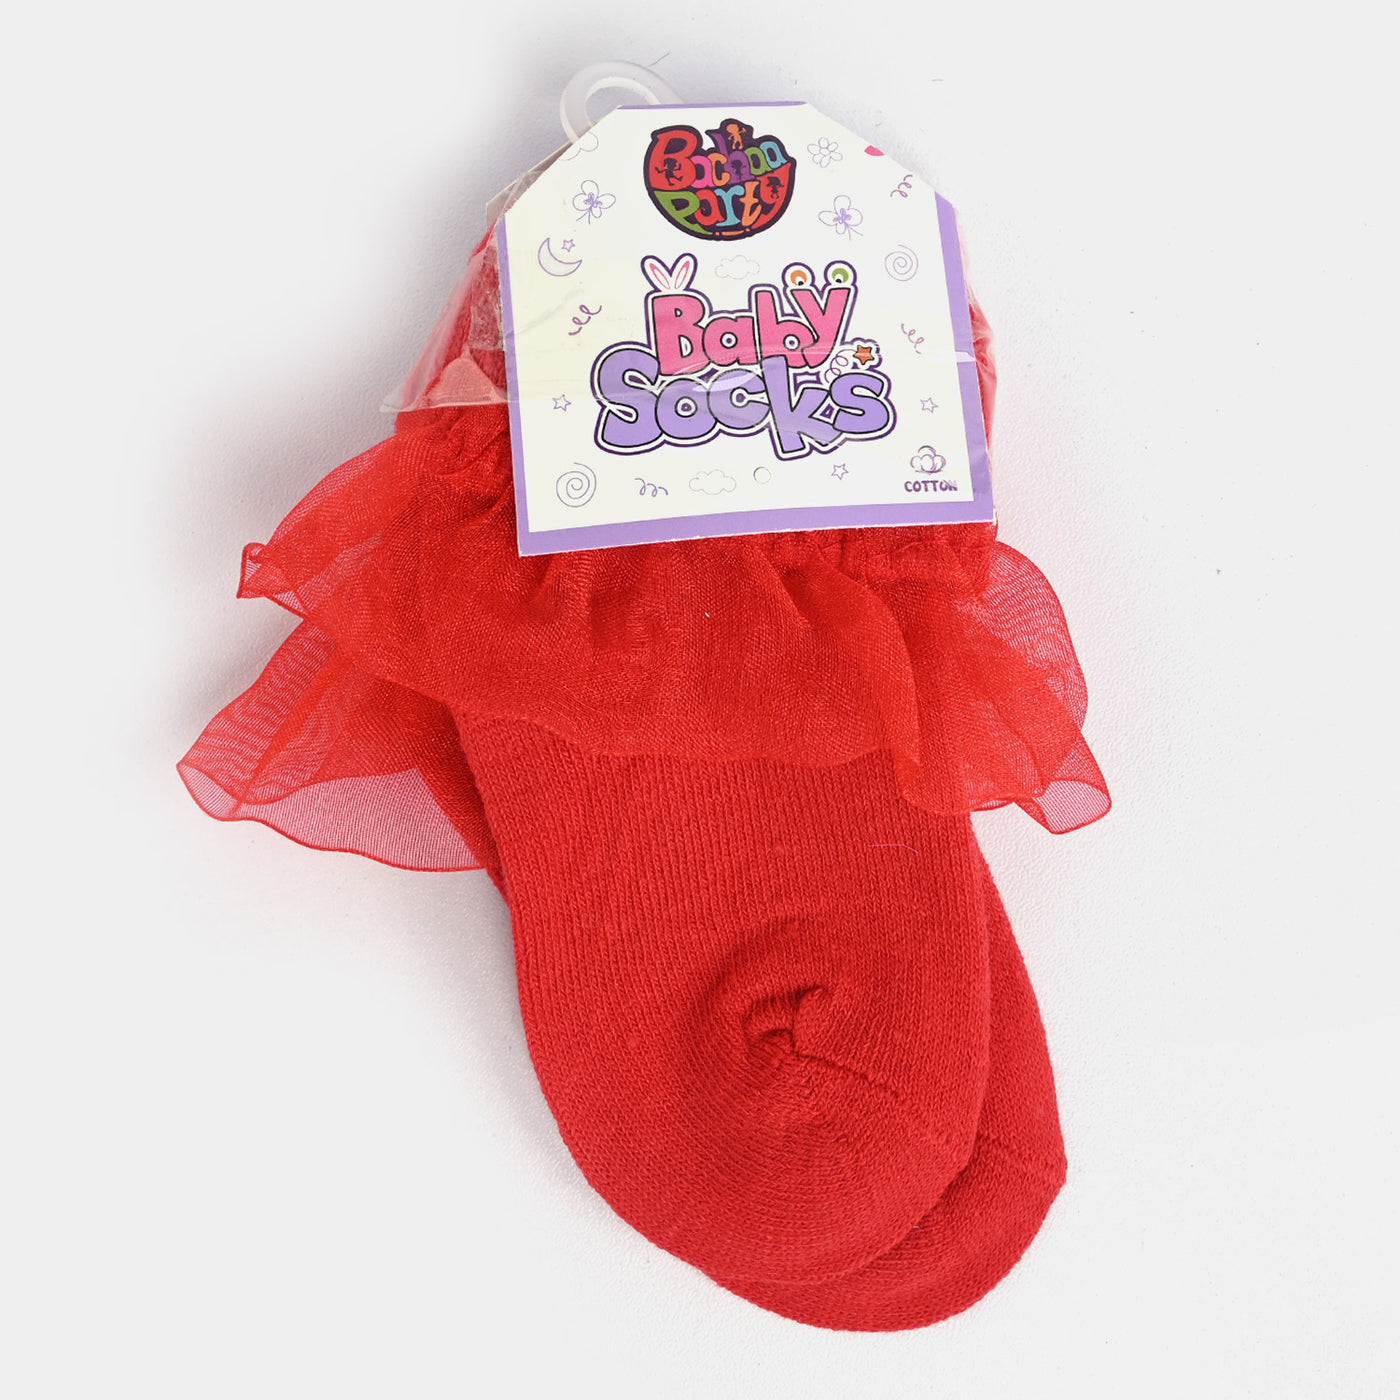 Girls Fashion Frill Socks |Red | 6-12Months